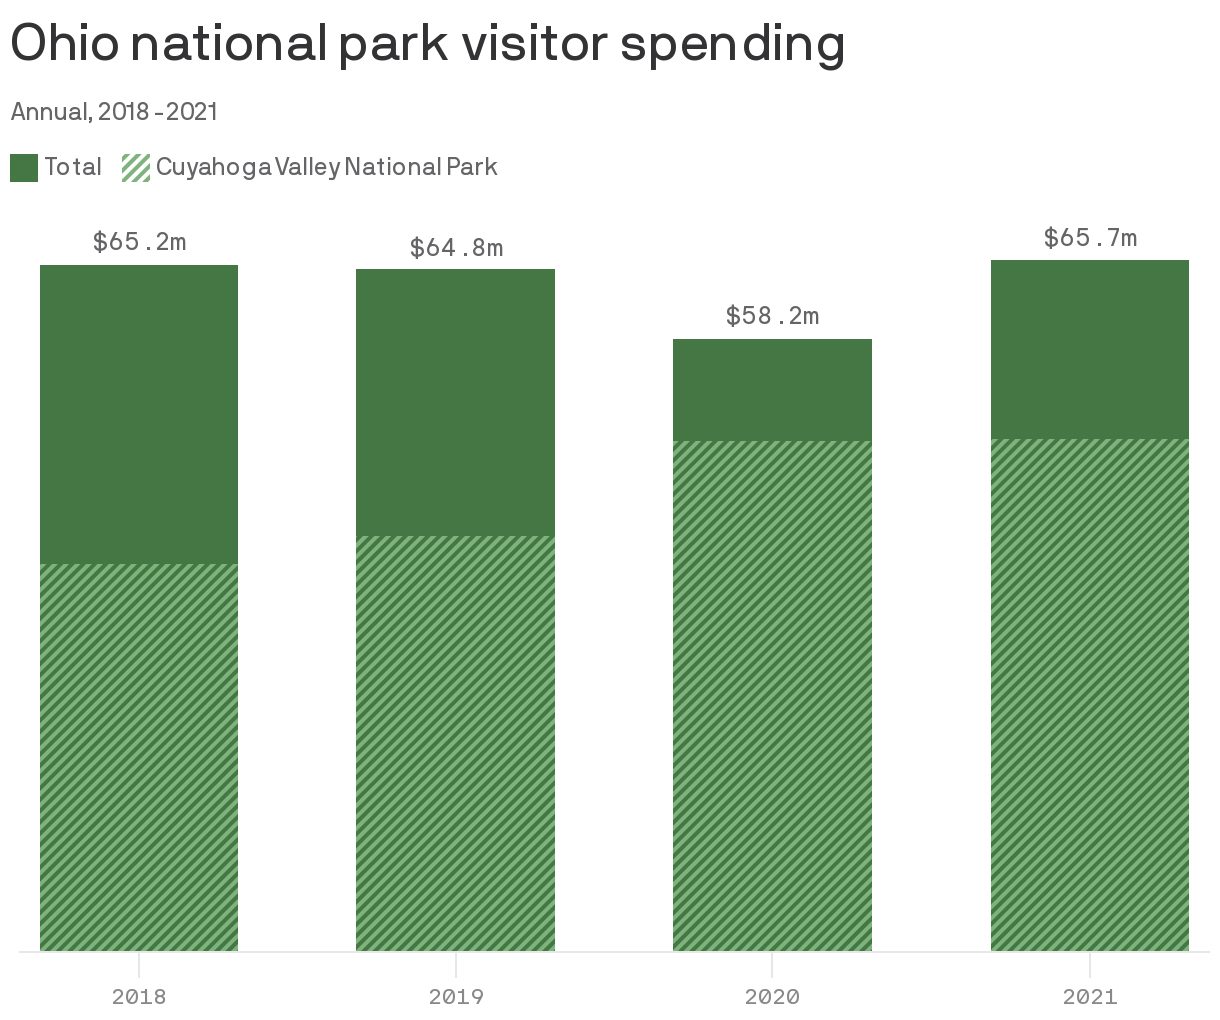 Ohio national park visitor spending